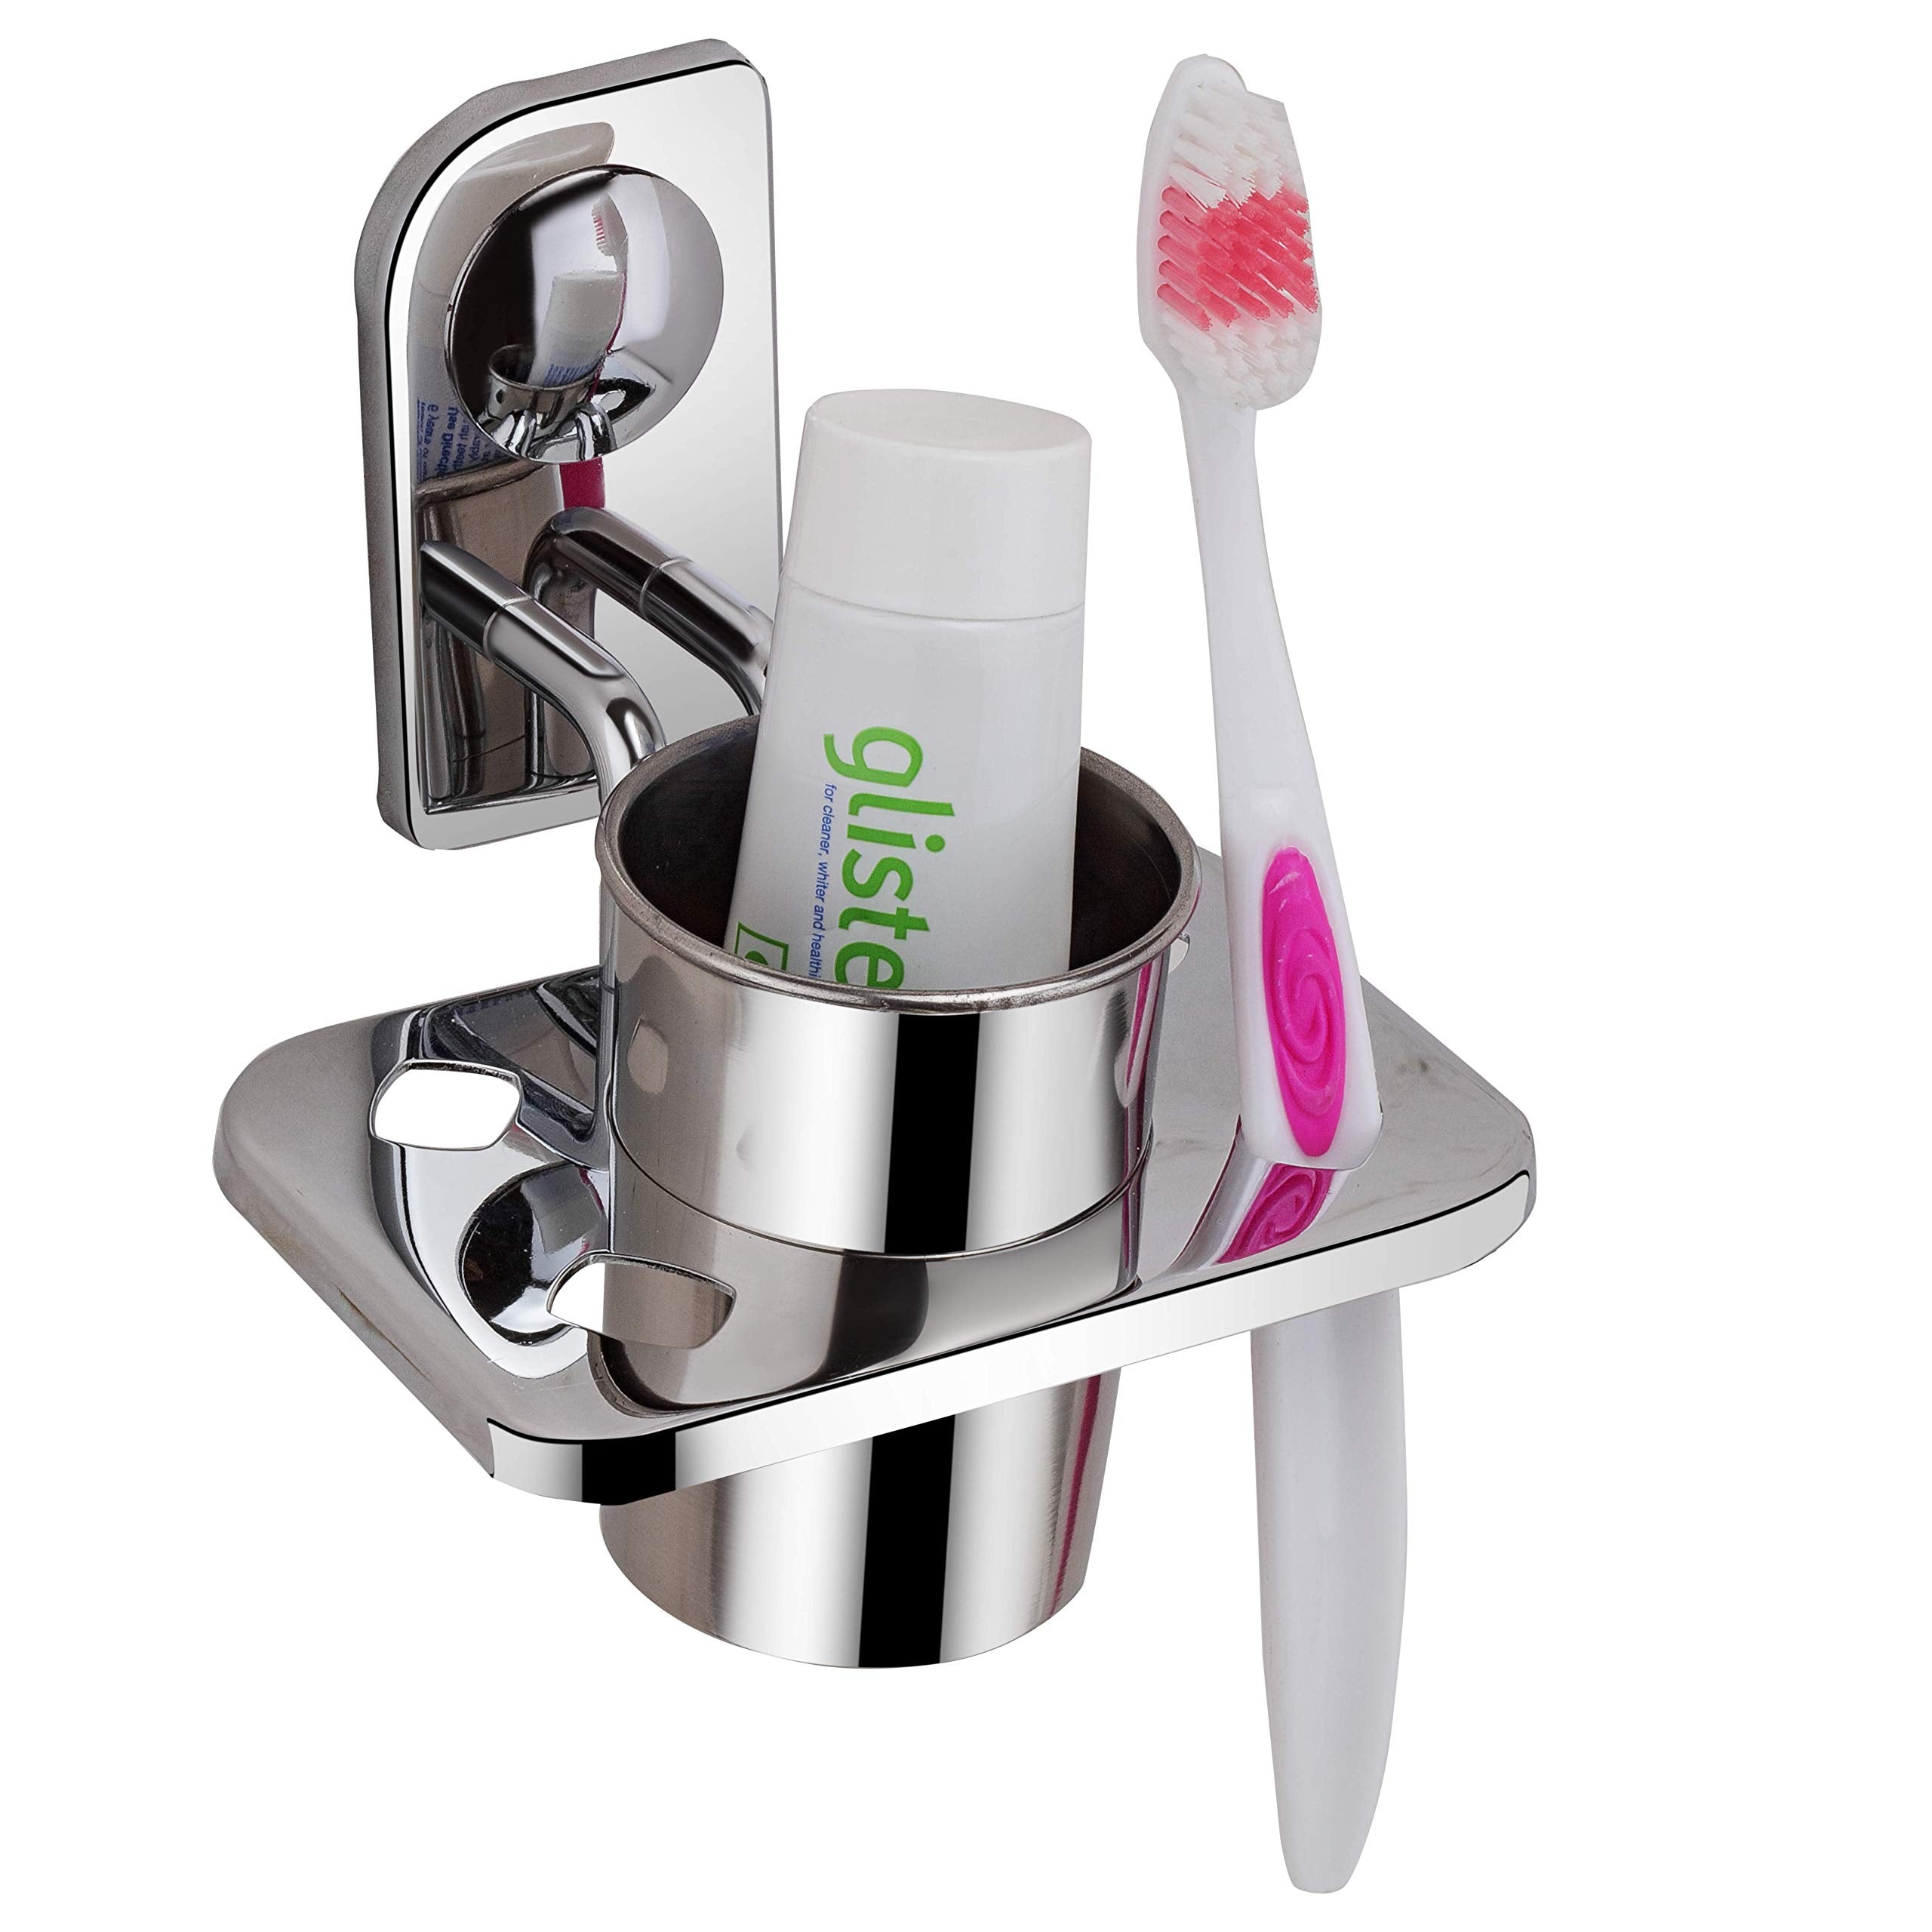 Plantex Dream Stainless Steel Tooth Brush Holder/Tumbler Holder/Bathroom Accessories (Chrome) - Pack of 2